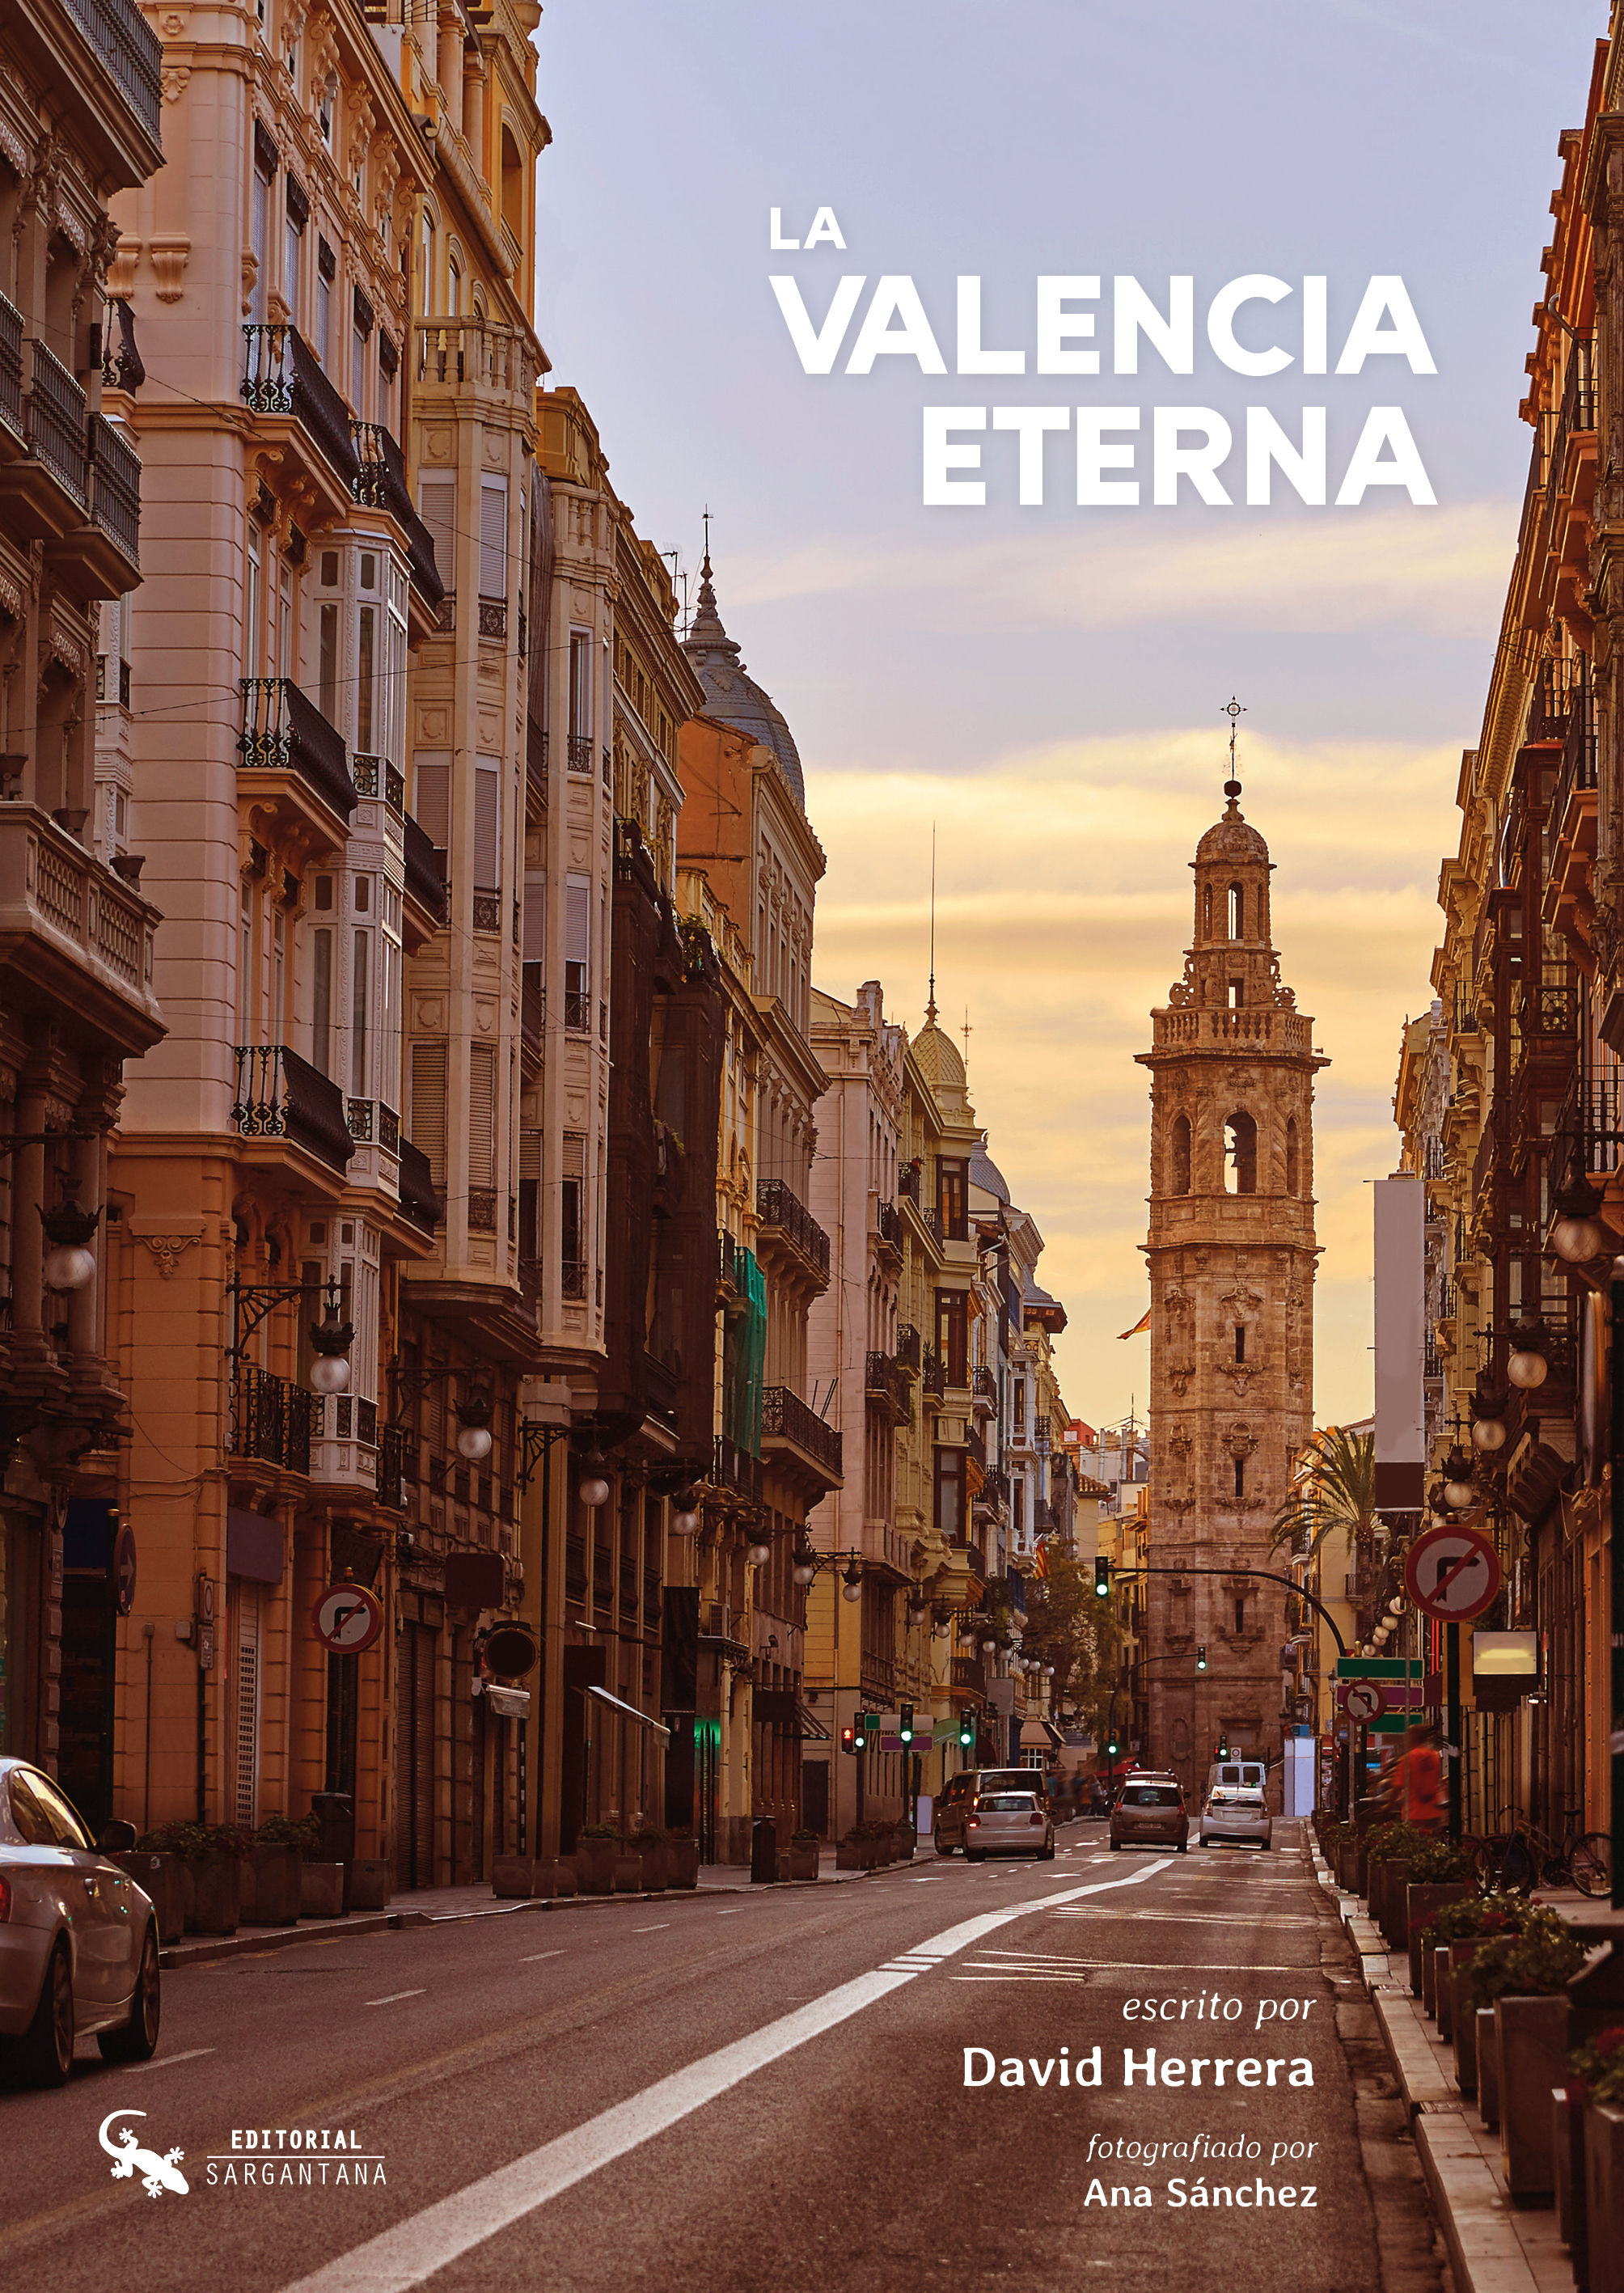 La Valencia eterna